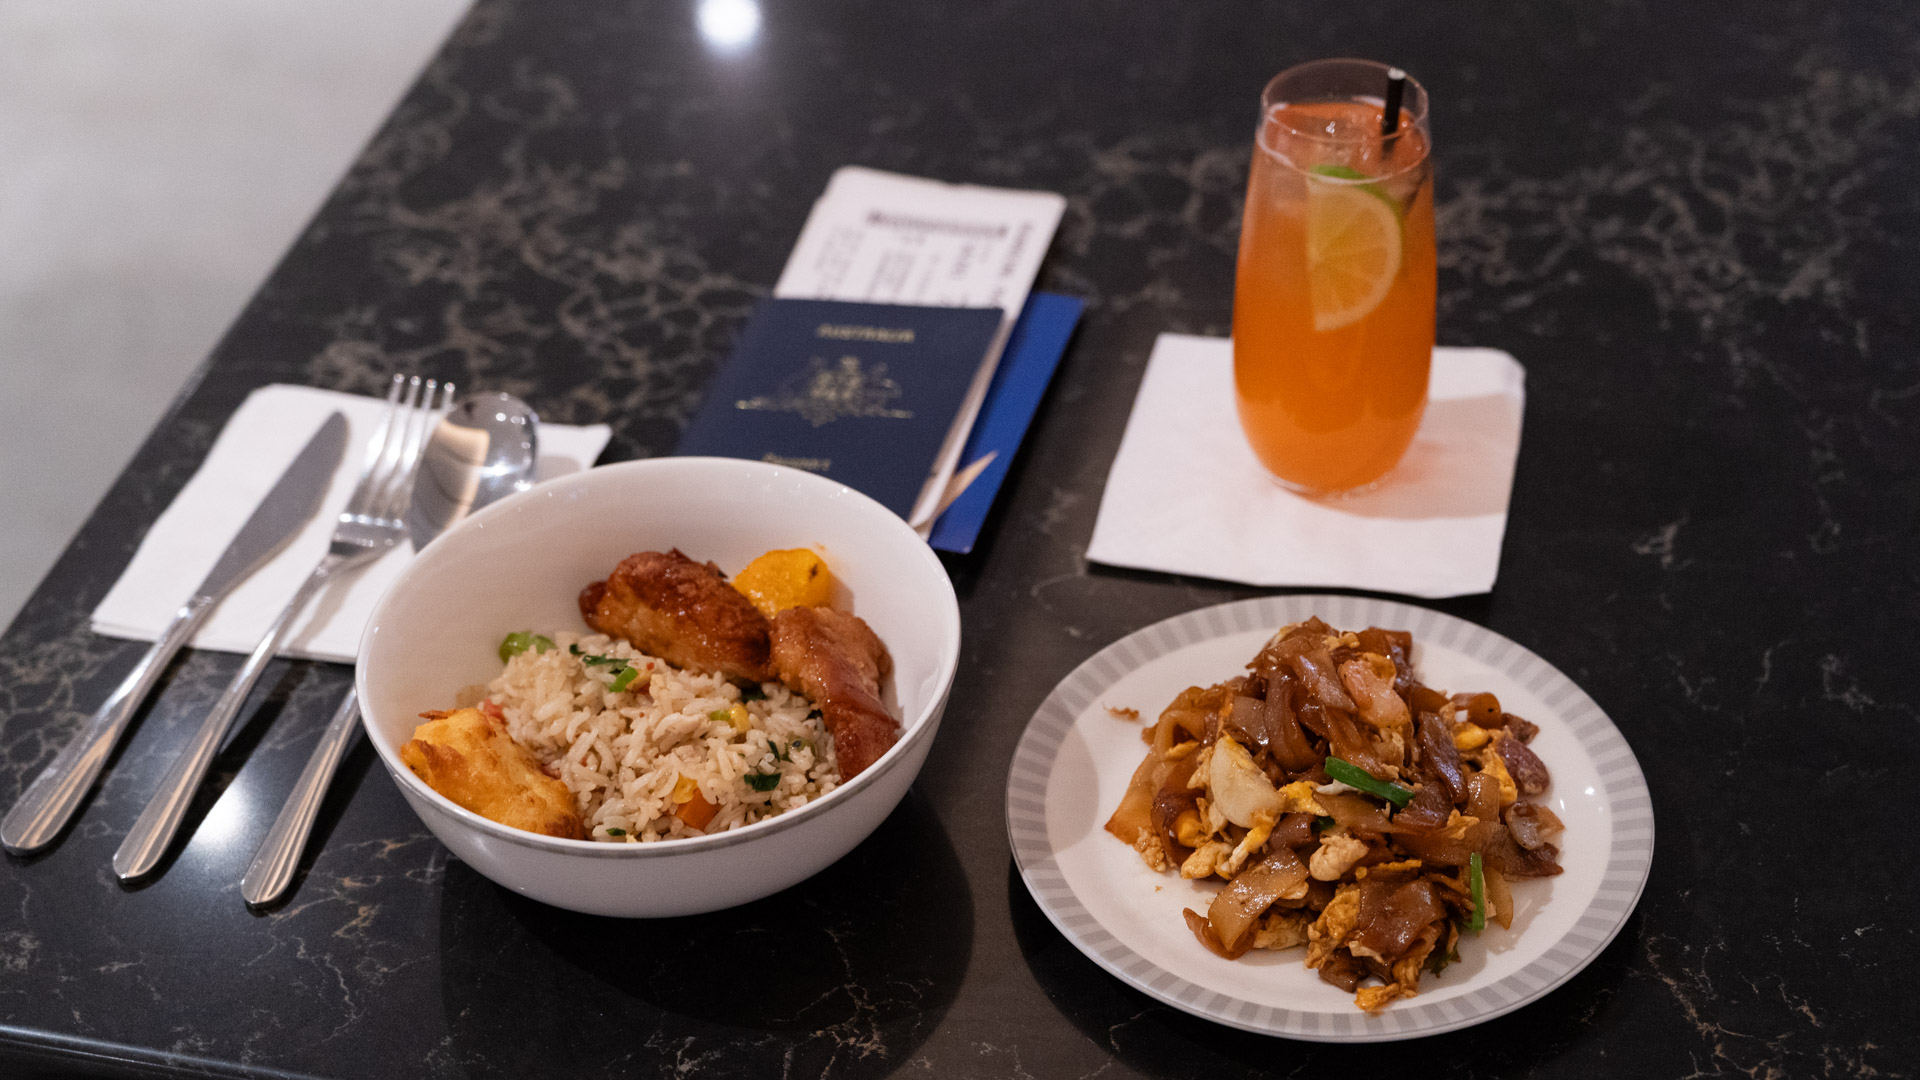 Singapore Airlines SilverKris Perth food